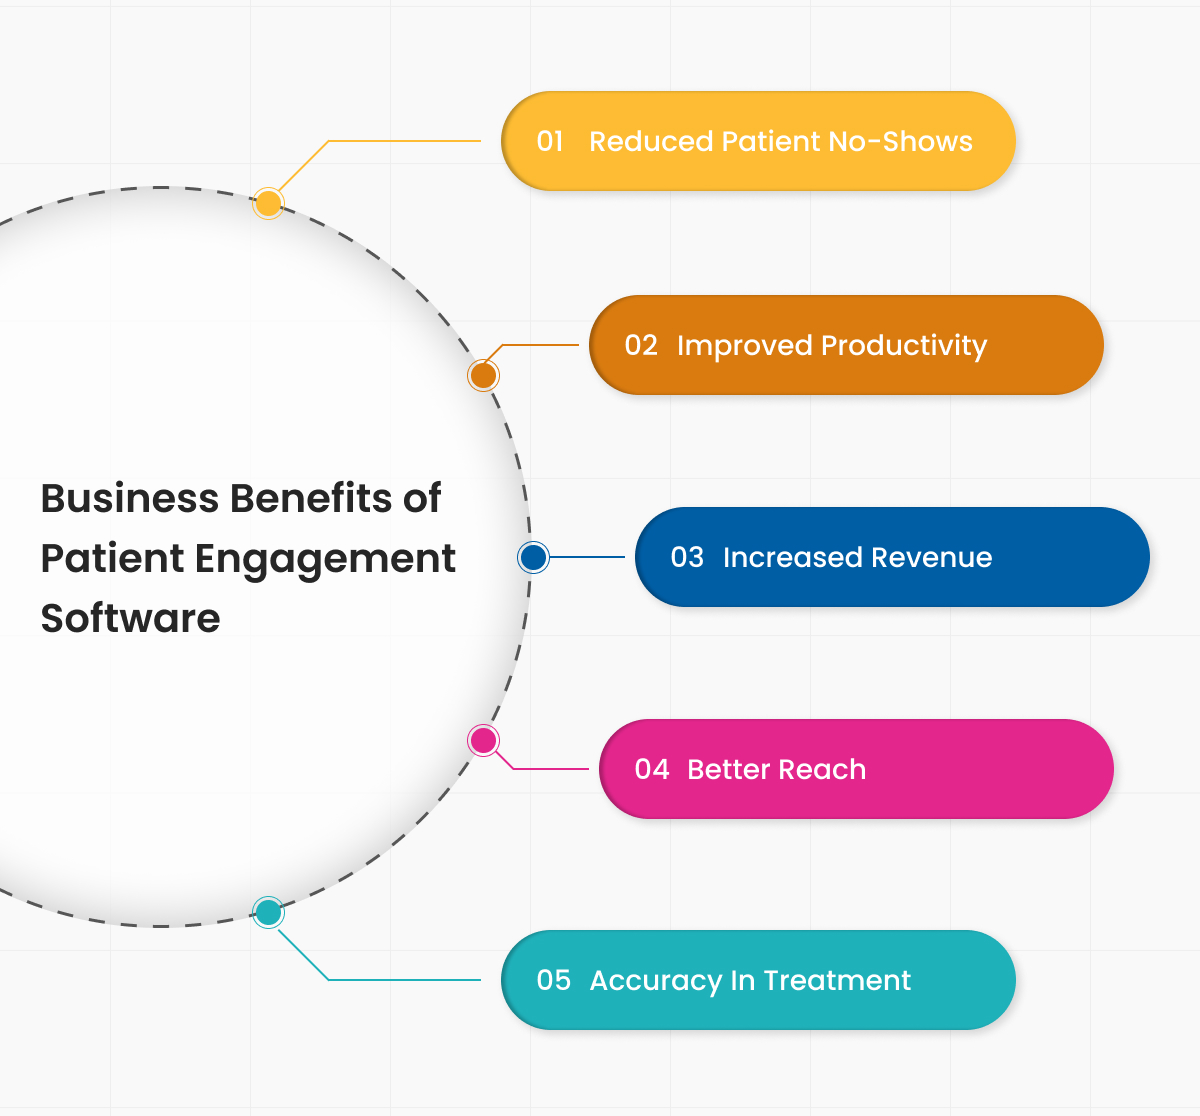 Business Benefits of Patient Engagement Software